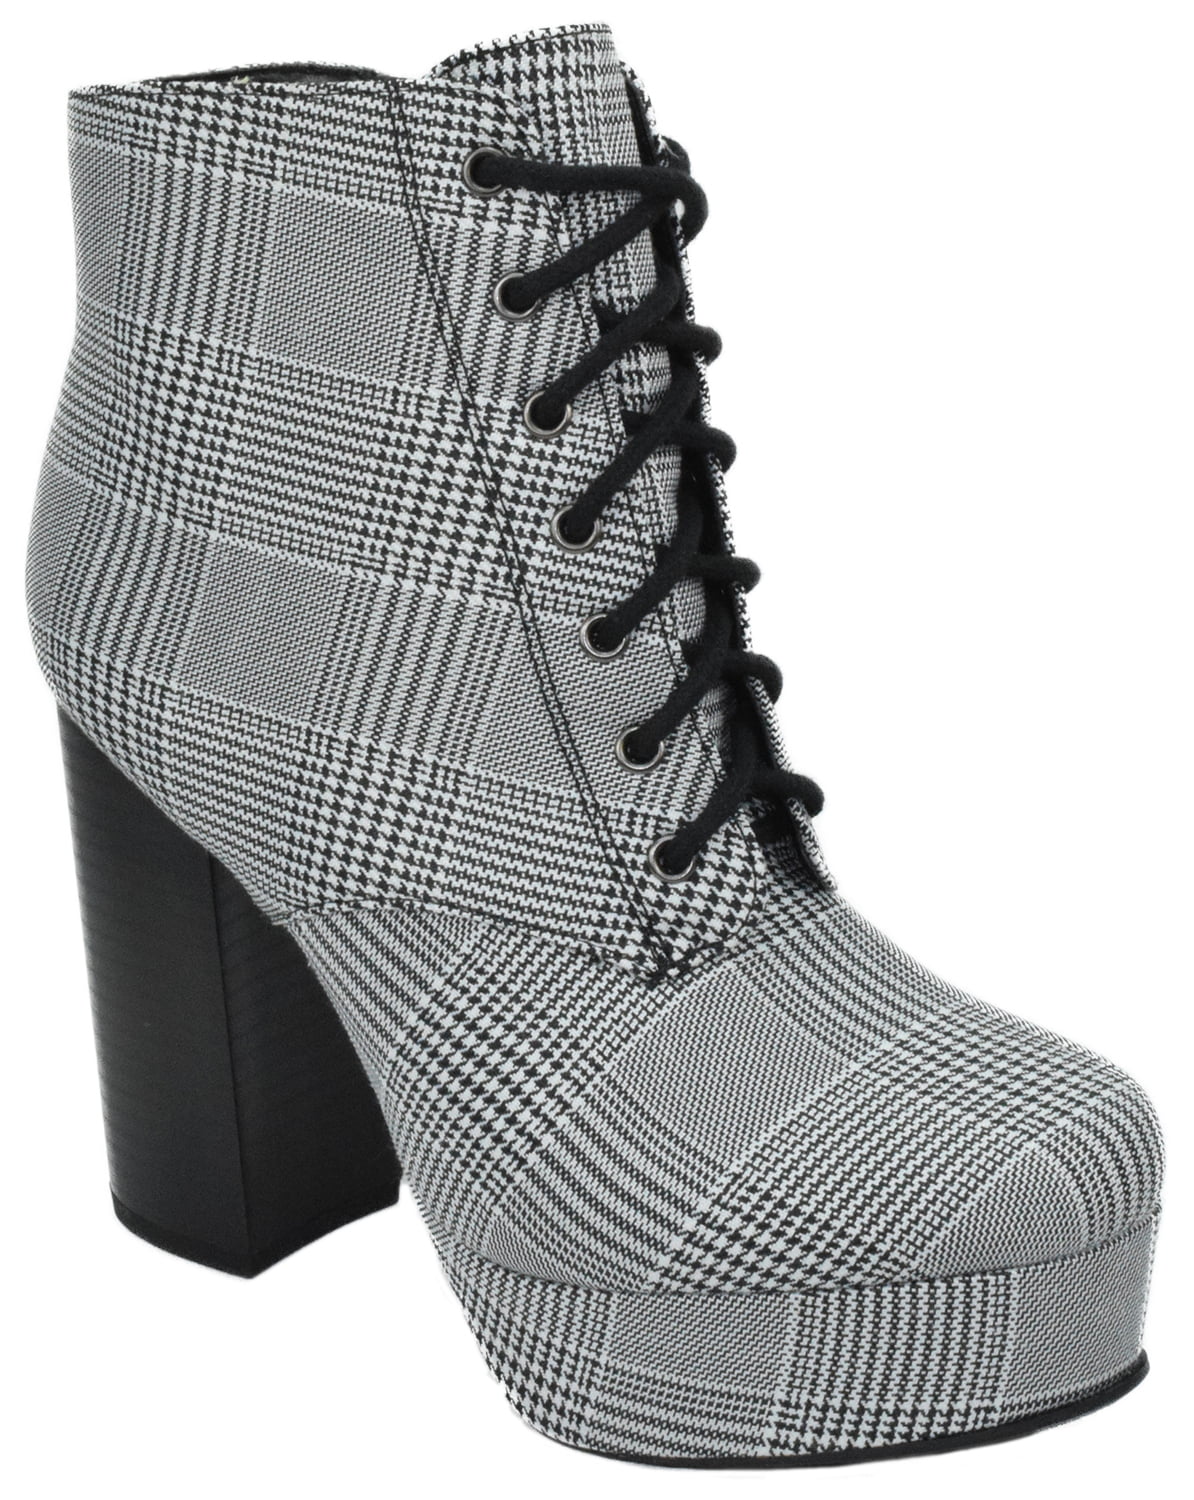 Ladies Ankle Boots Platform Wedge Faux Suede High Heels Plus Size Shoes Q328 